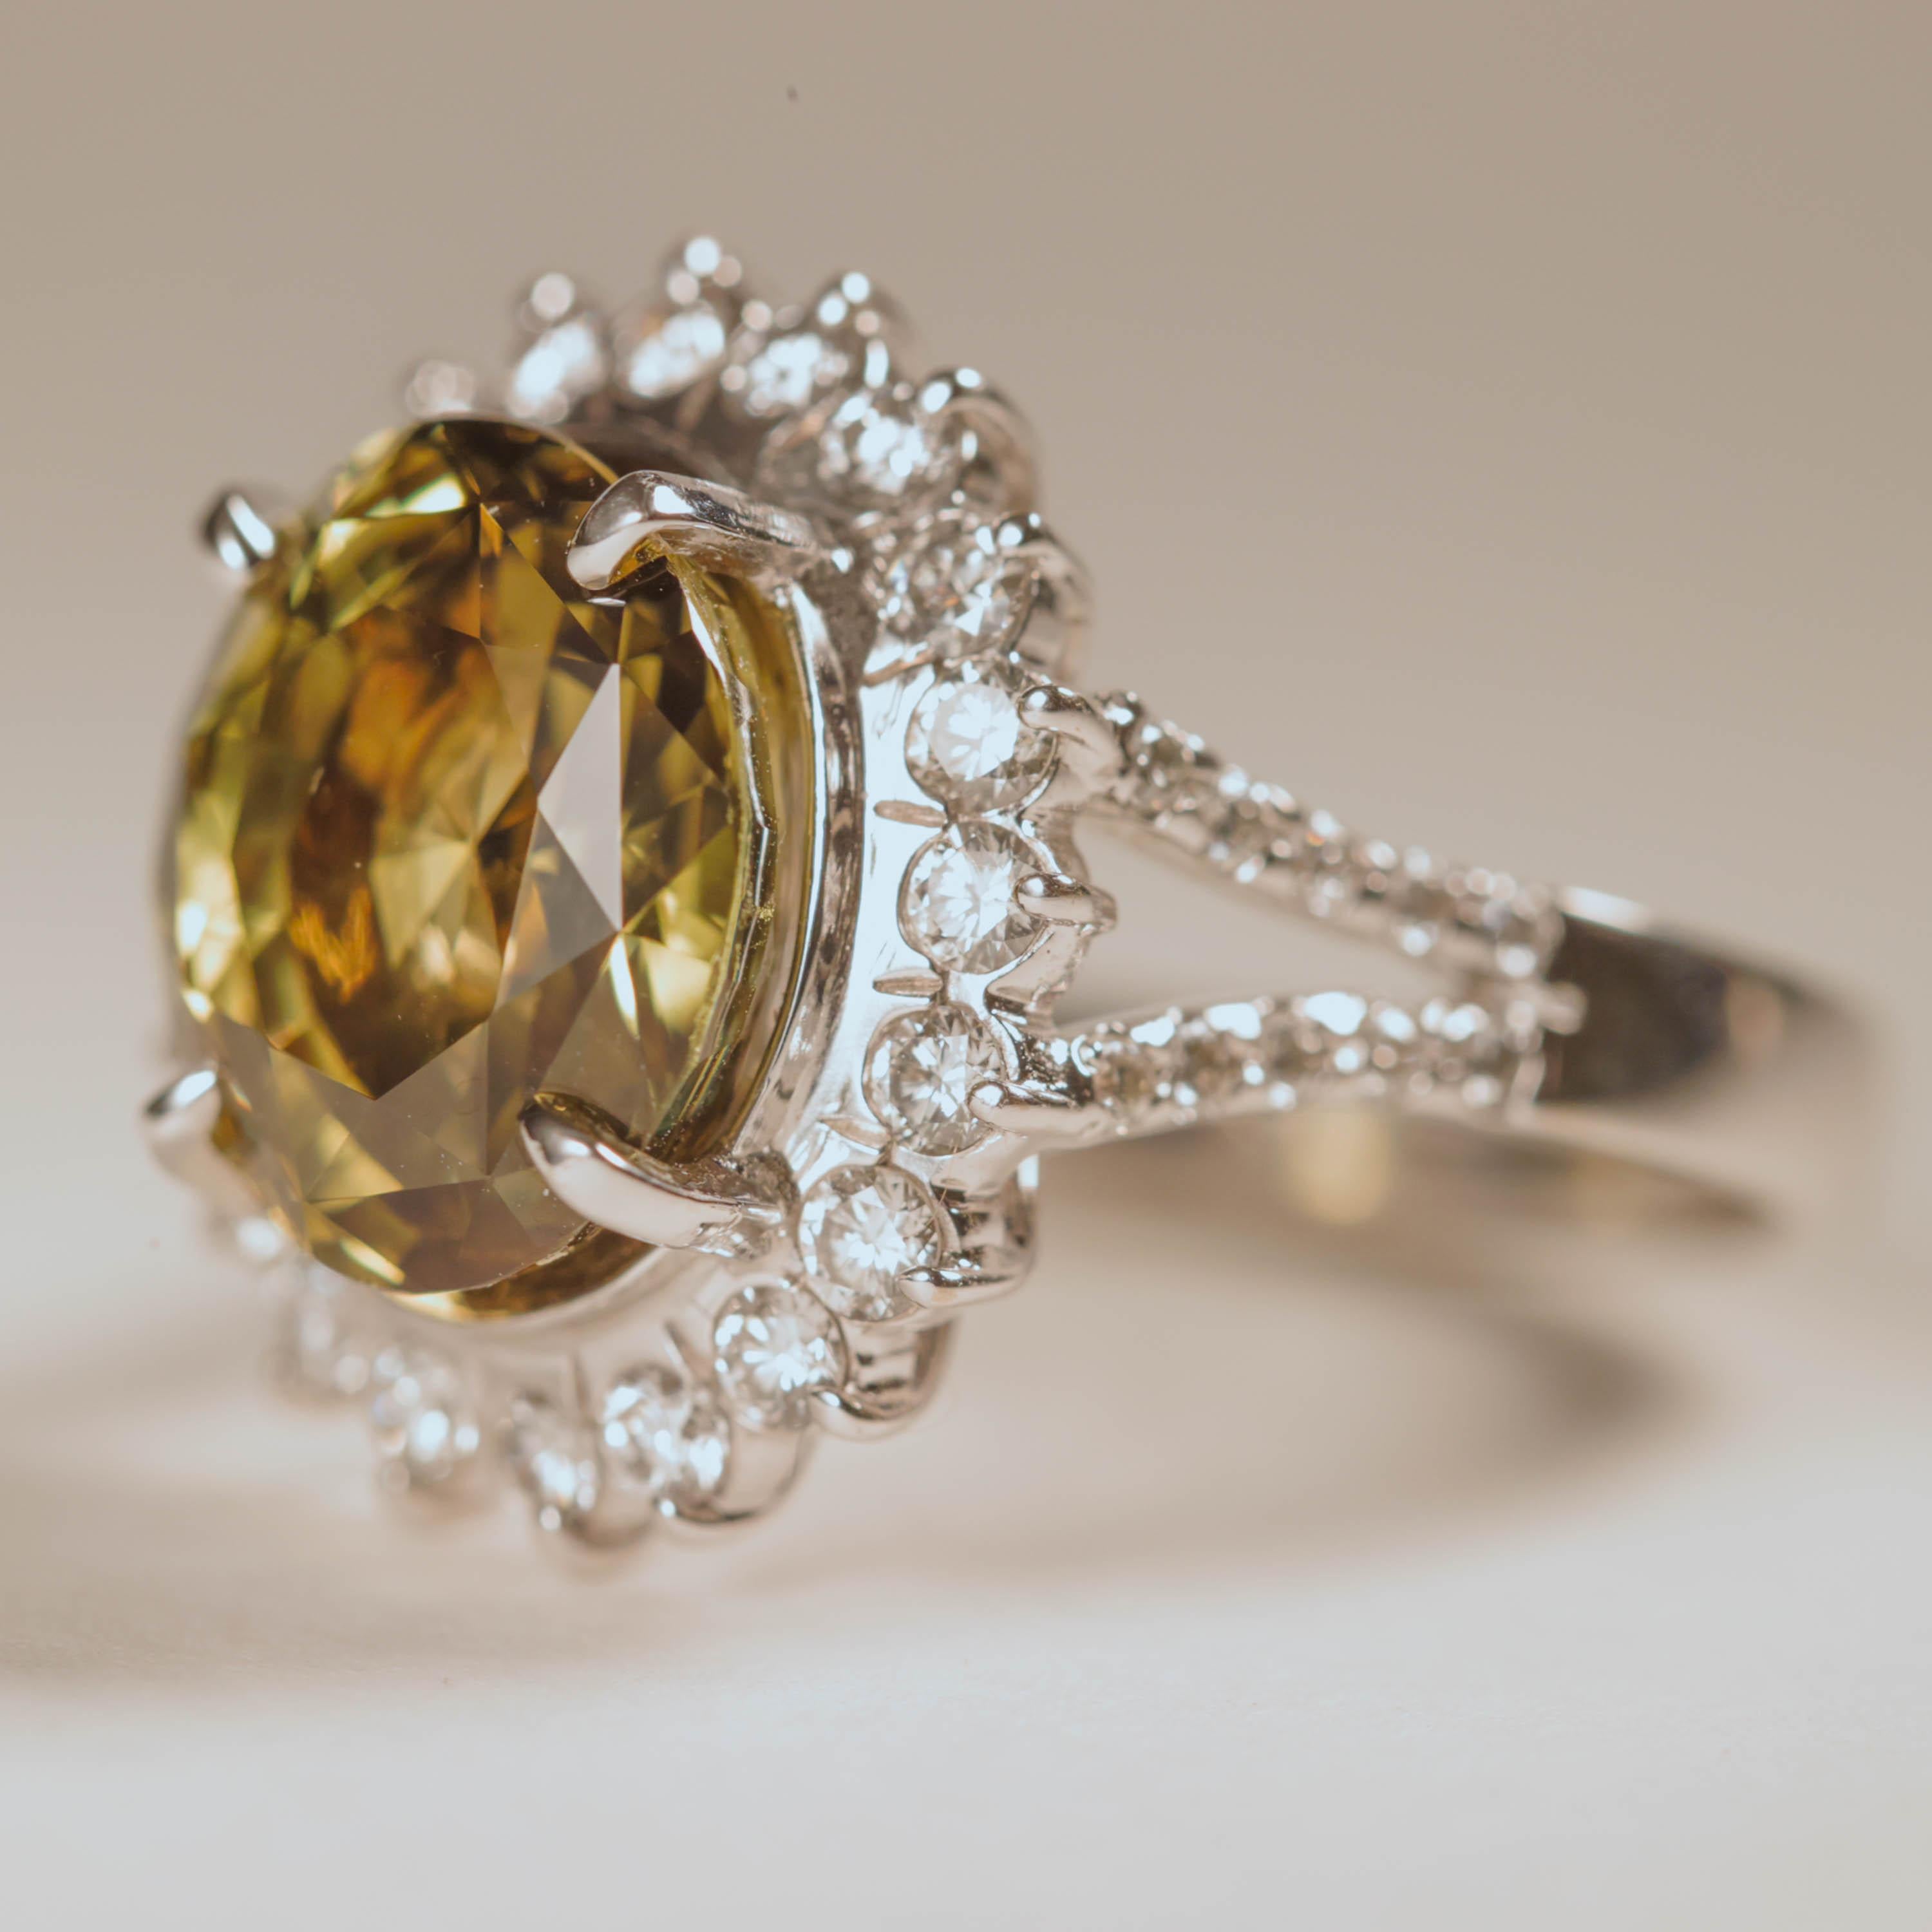 Alexandrite & Diamond Ring 7.35 Carats, Rare Color Change Gem Certified 6